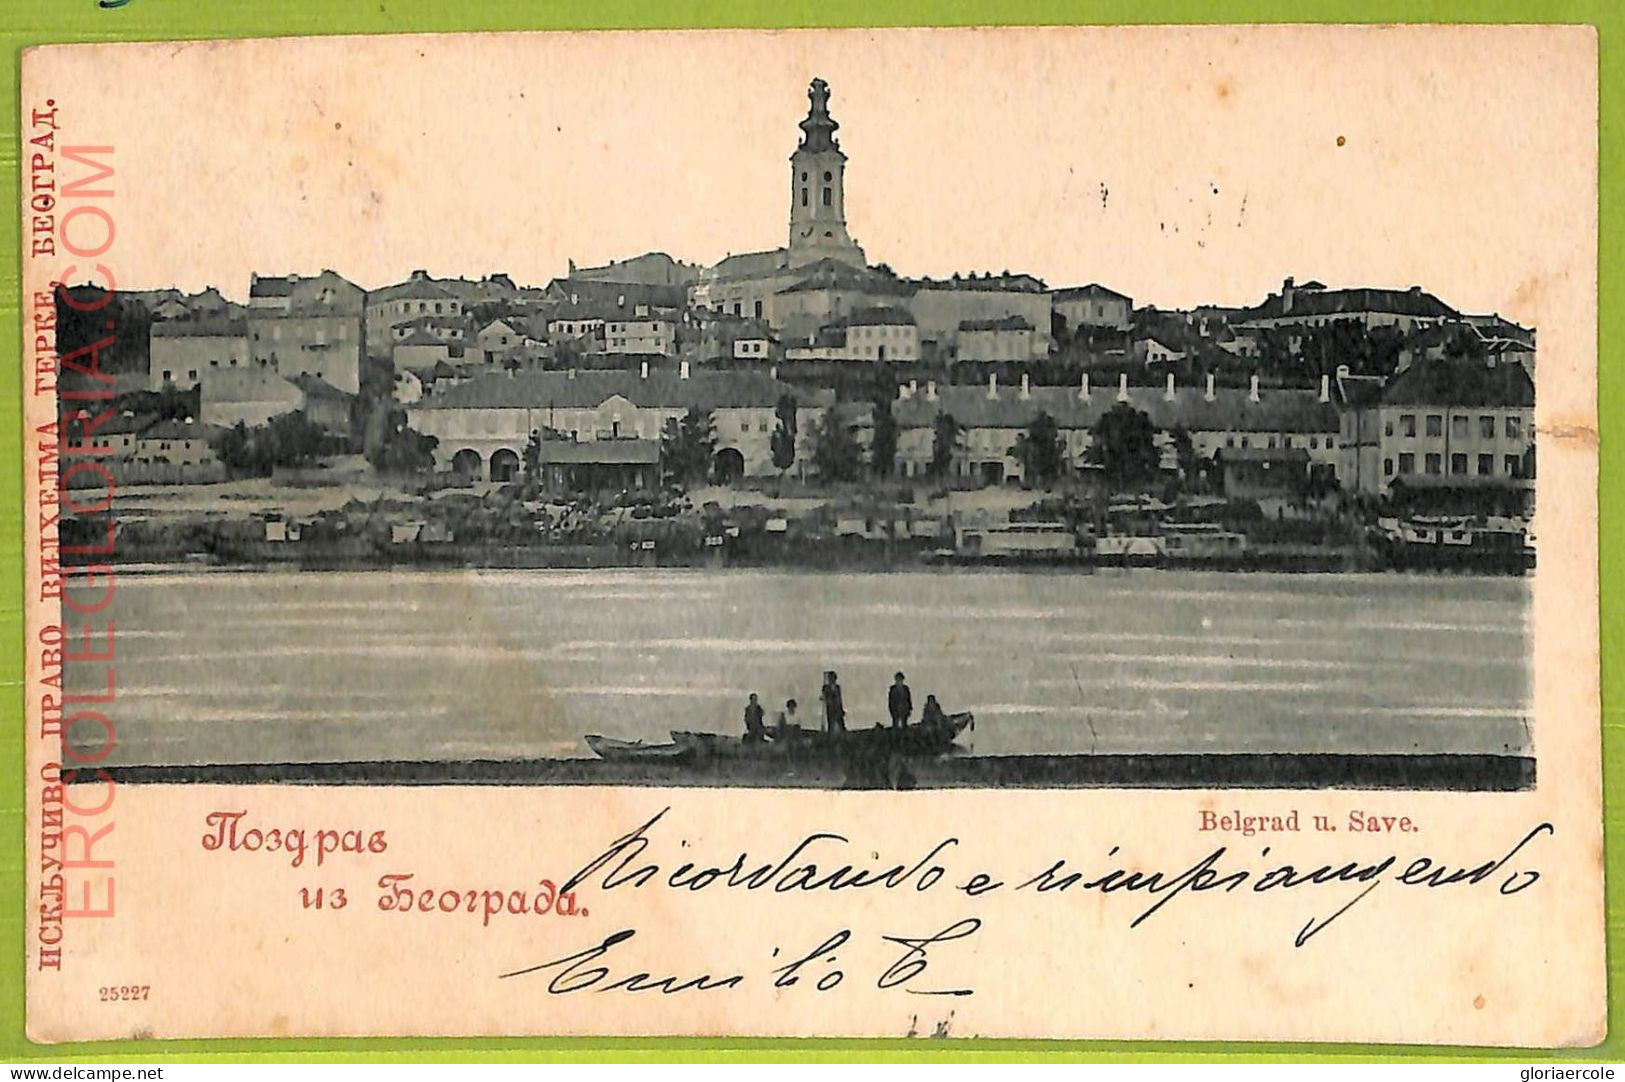 Ae8872 - Ansichtskarten VINTAGE POSTCARD - SERBIA - Belgrade Бео́град - 1900 - Serbia